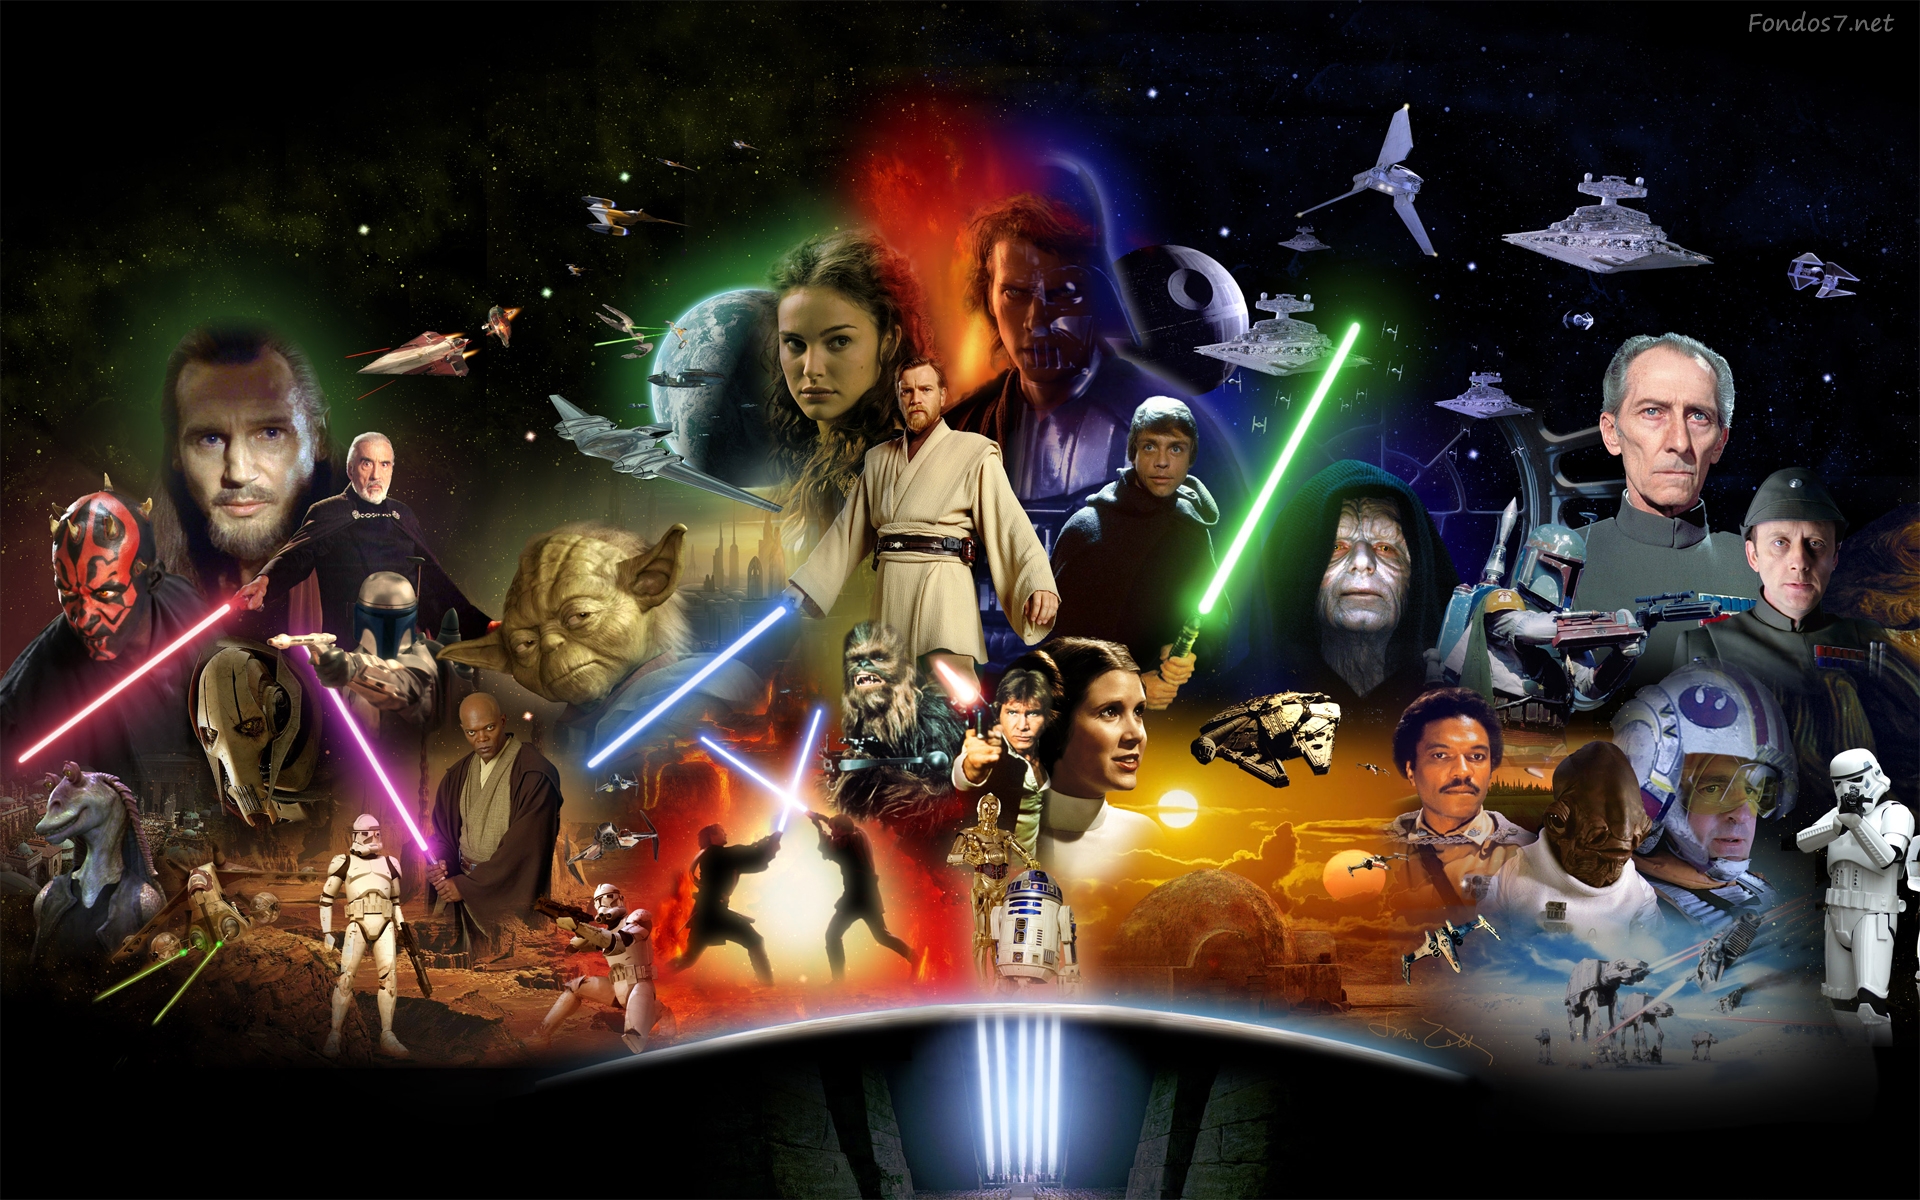 Star wars wallpaper hd 1080p iconos